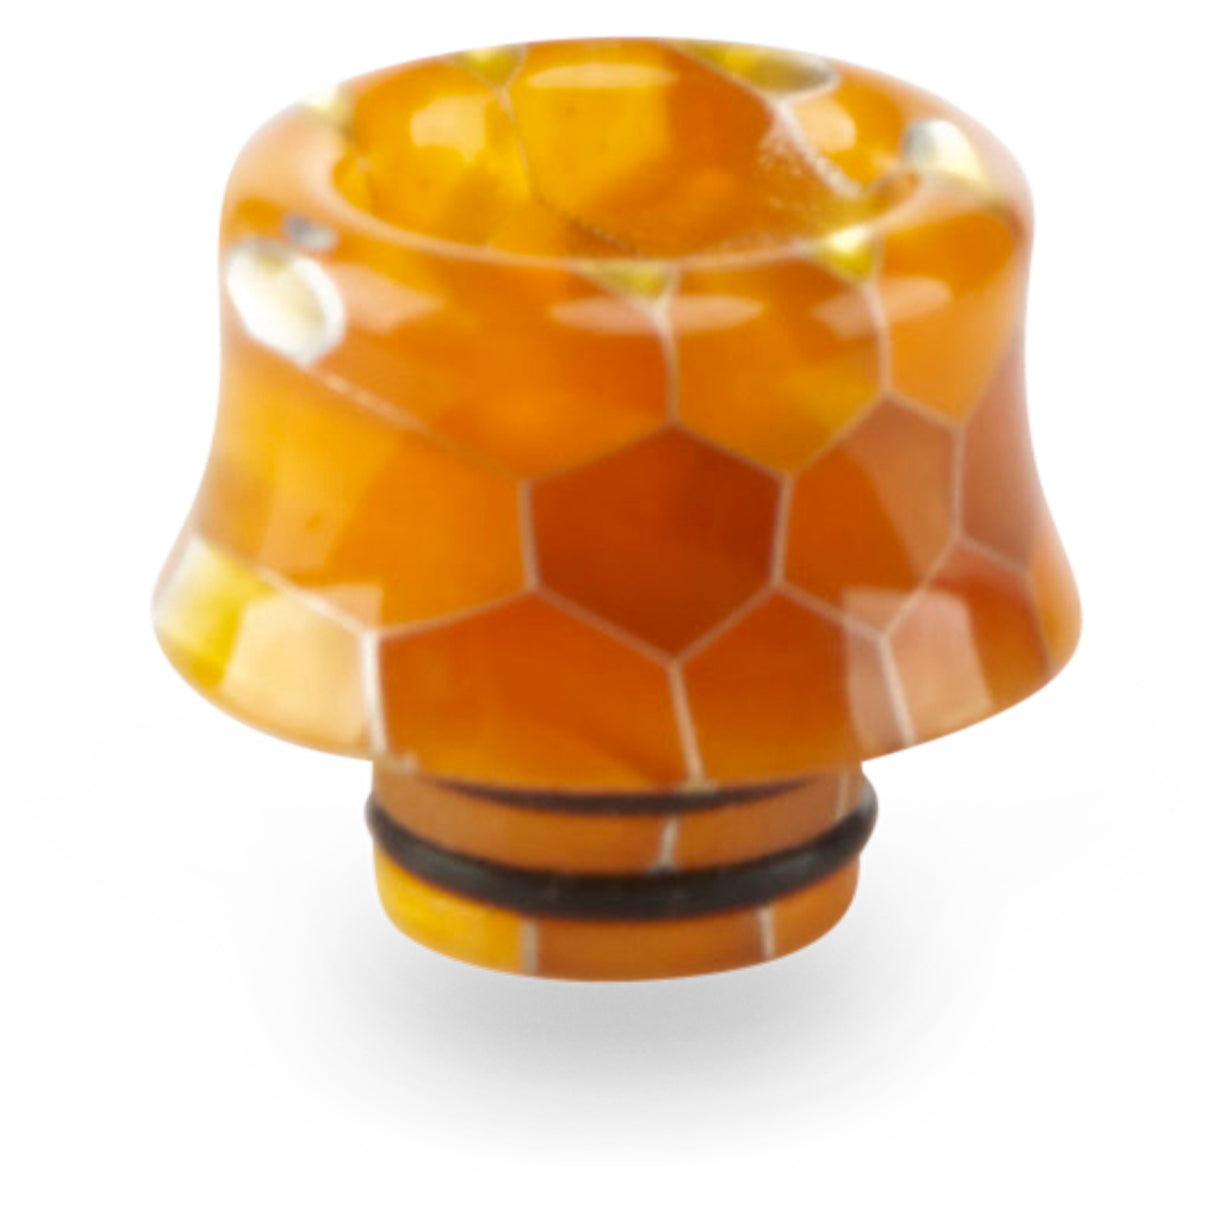 Honeycomb 510 Drip Tip